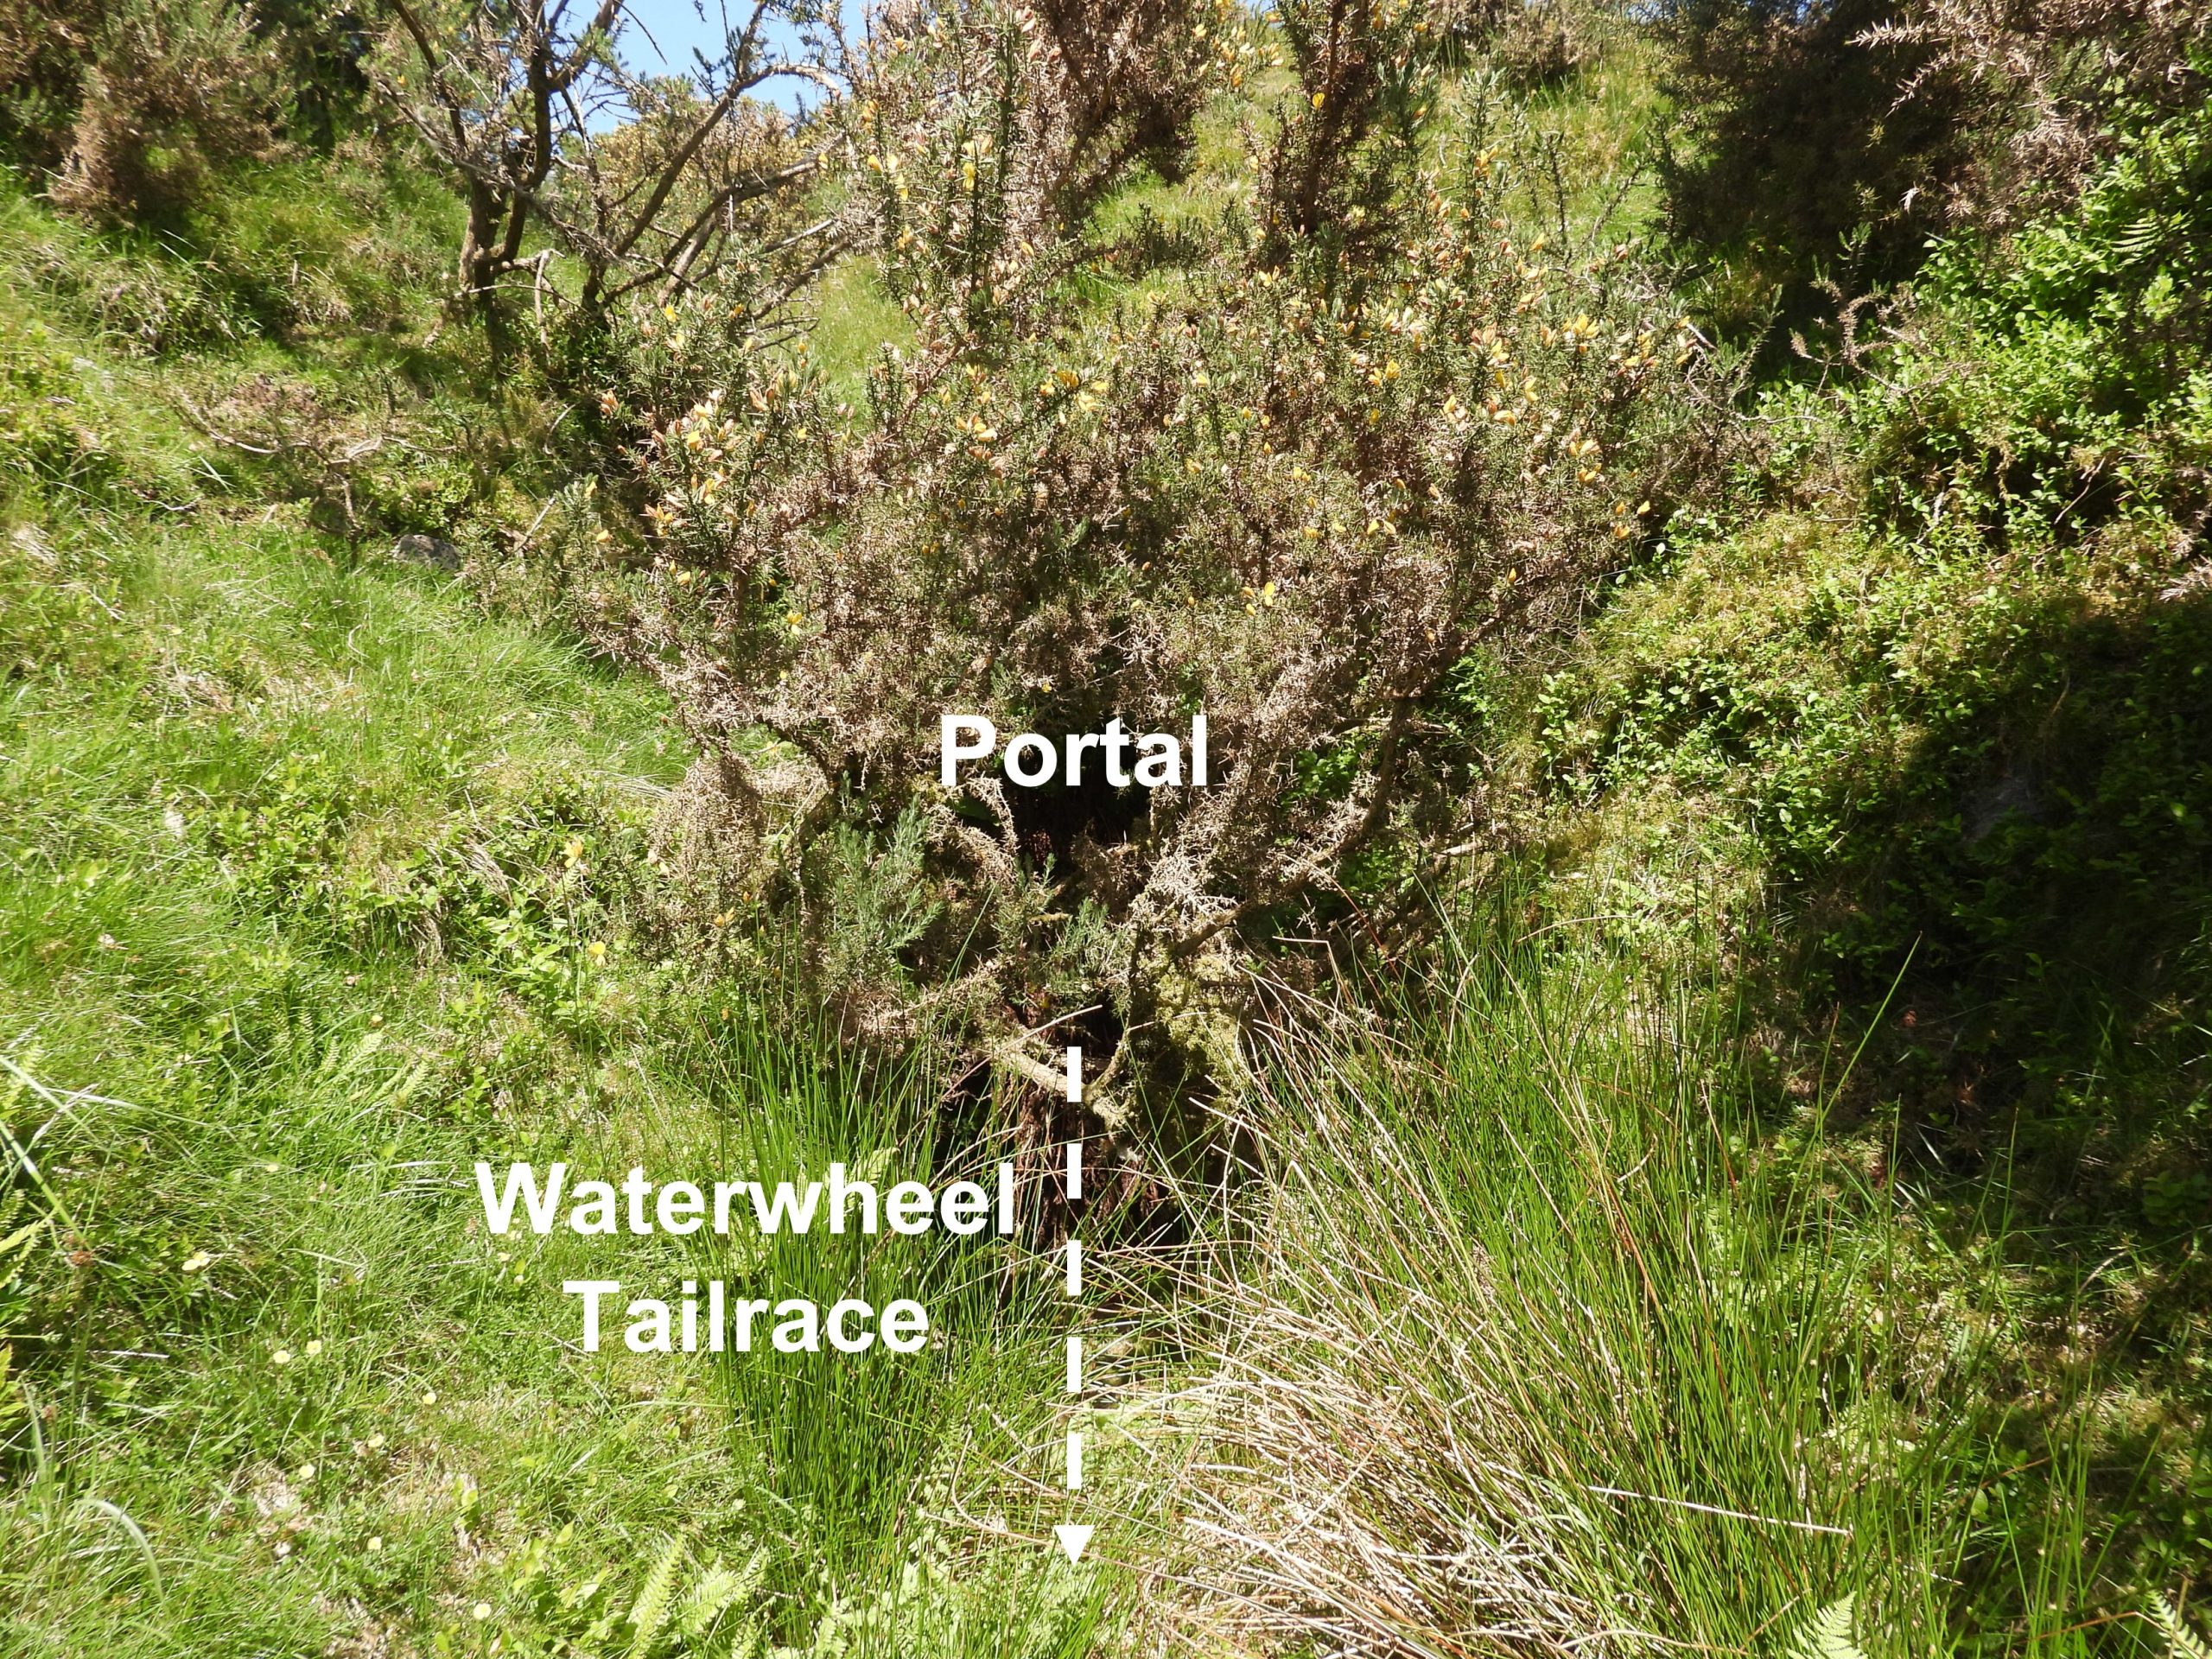 14. Waterwheel Tailrace Portal a